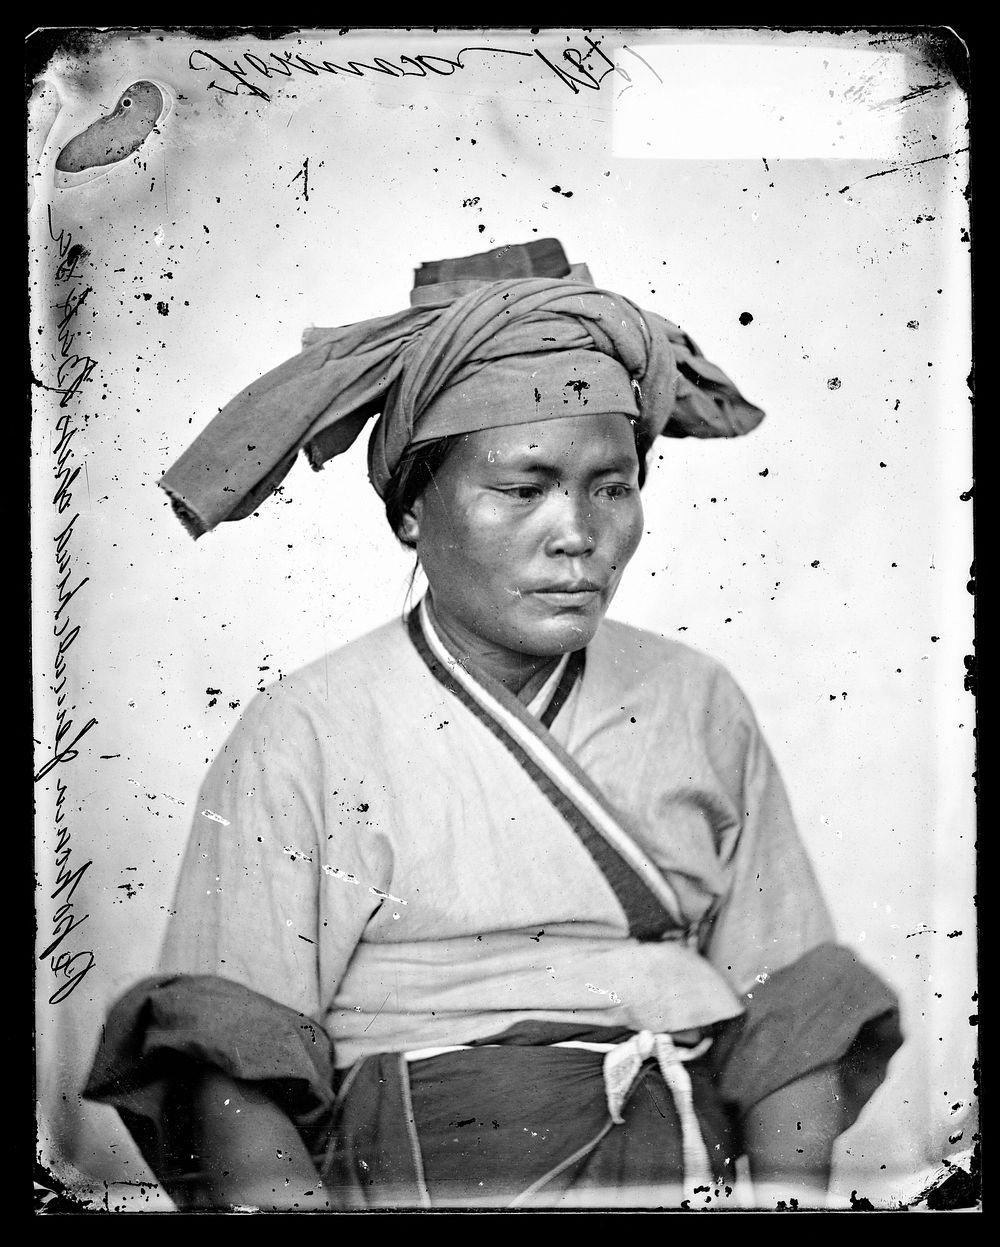 Baksa, Formosa [Taiwan]. Photograph by John Thomson, 1871.